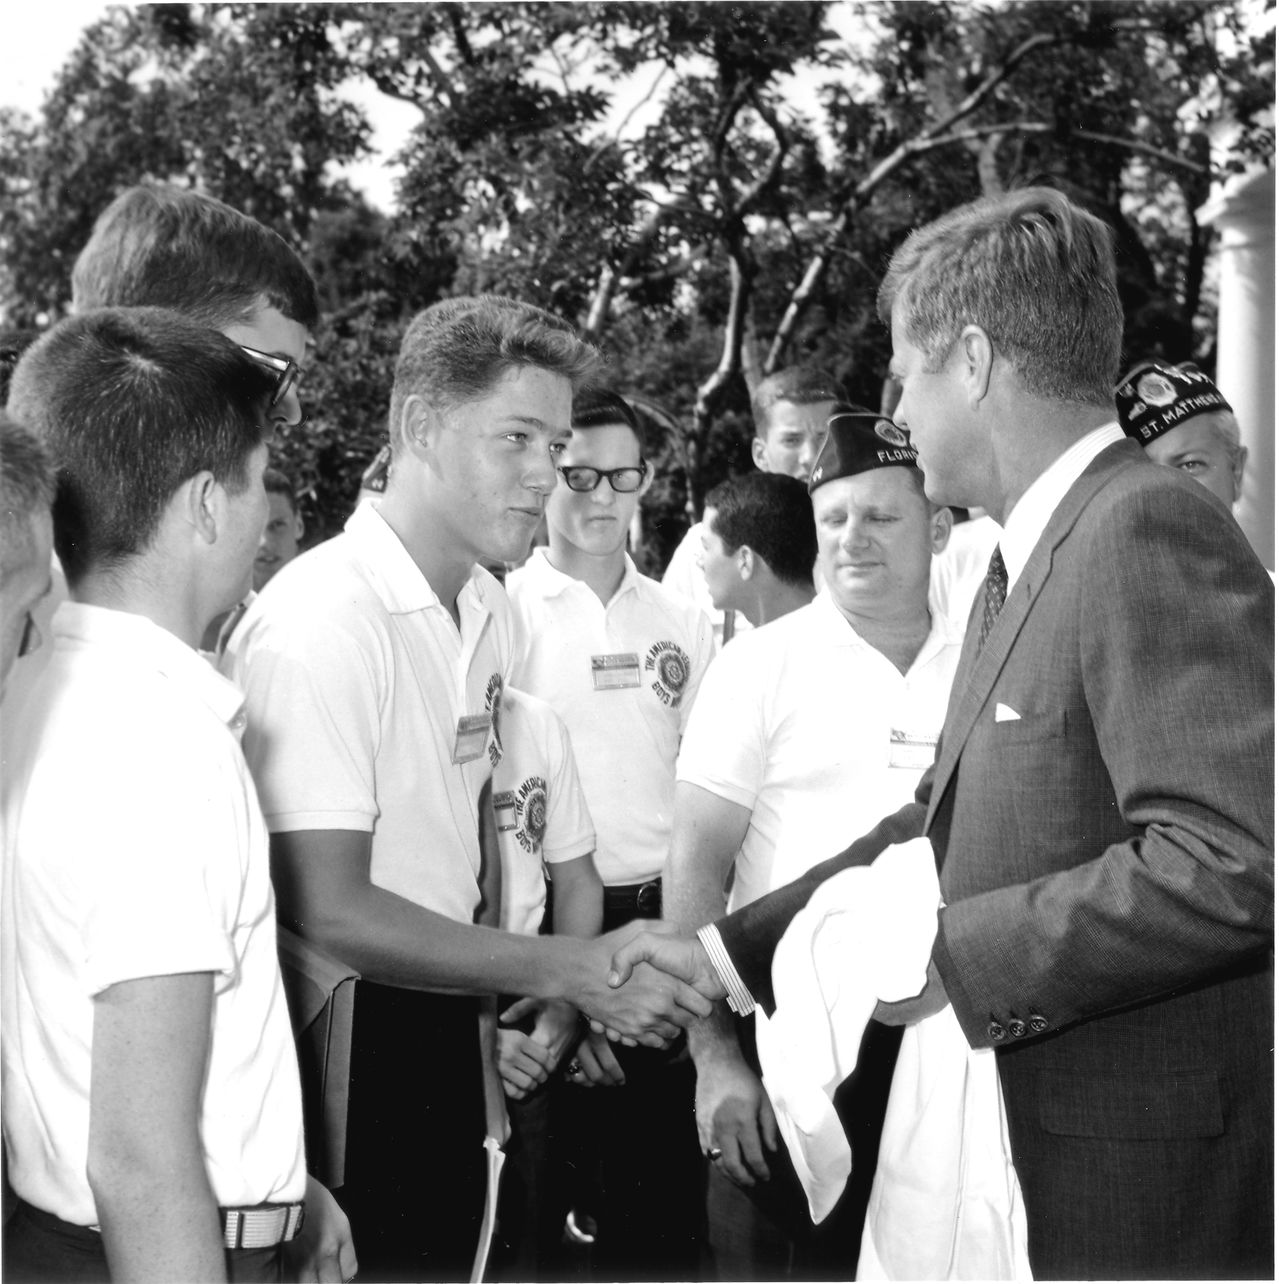 16 year old Bill Clinton meets John F Kennedy